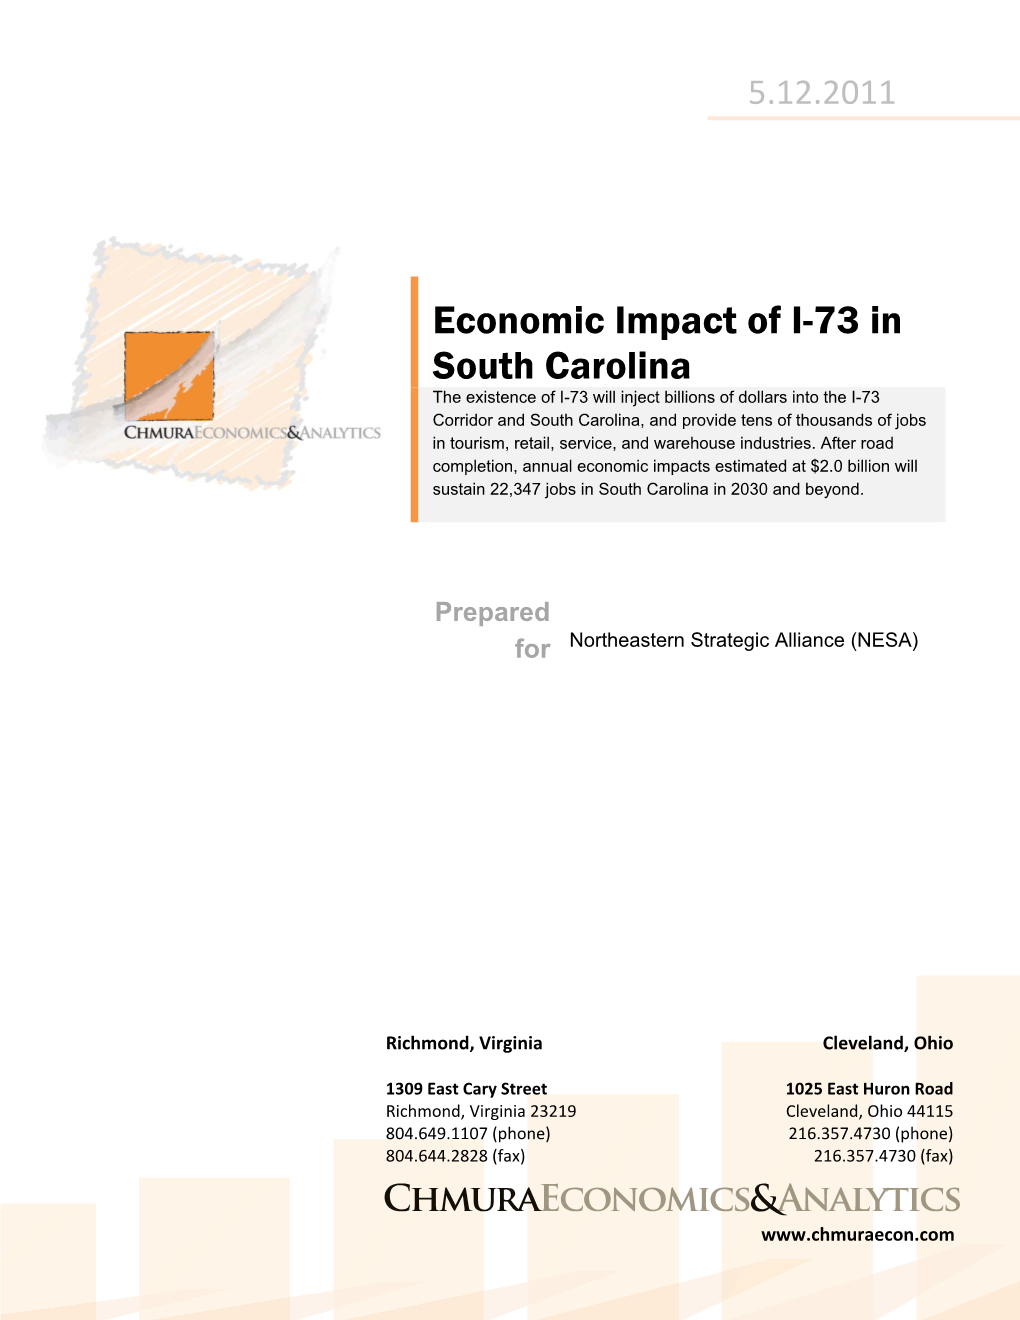 Economic Impact of I-73 in South Carolina